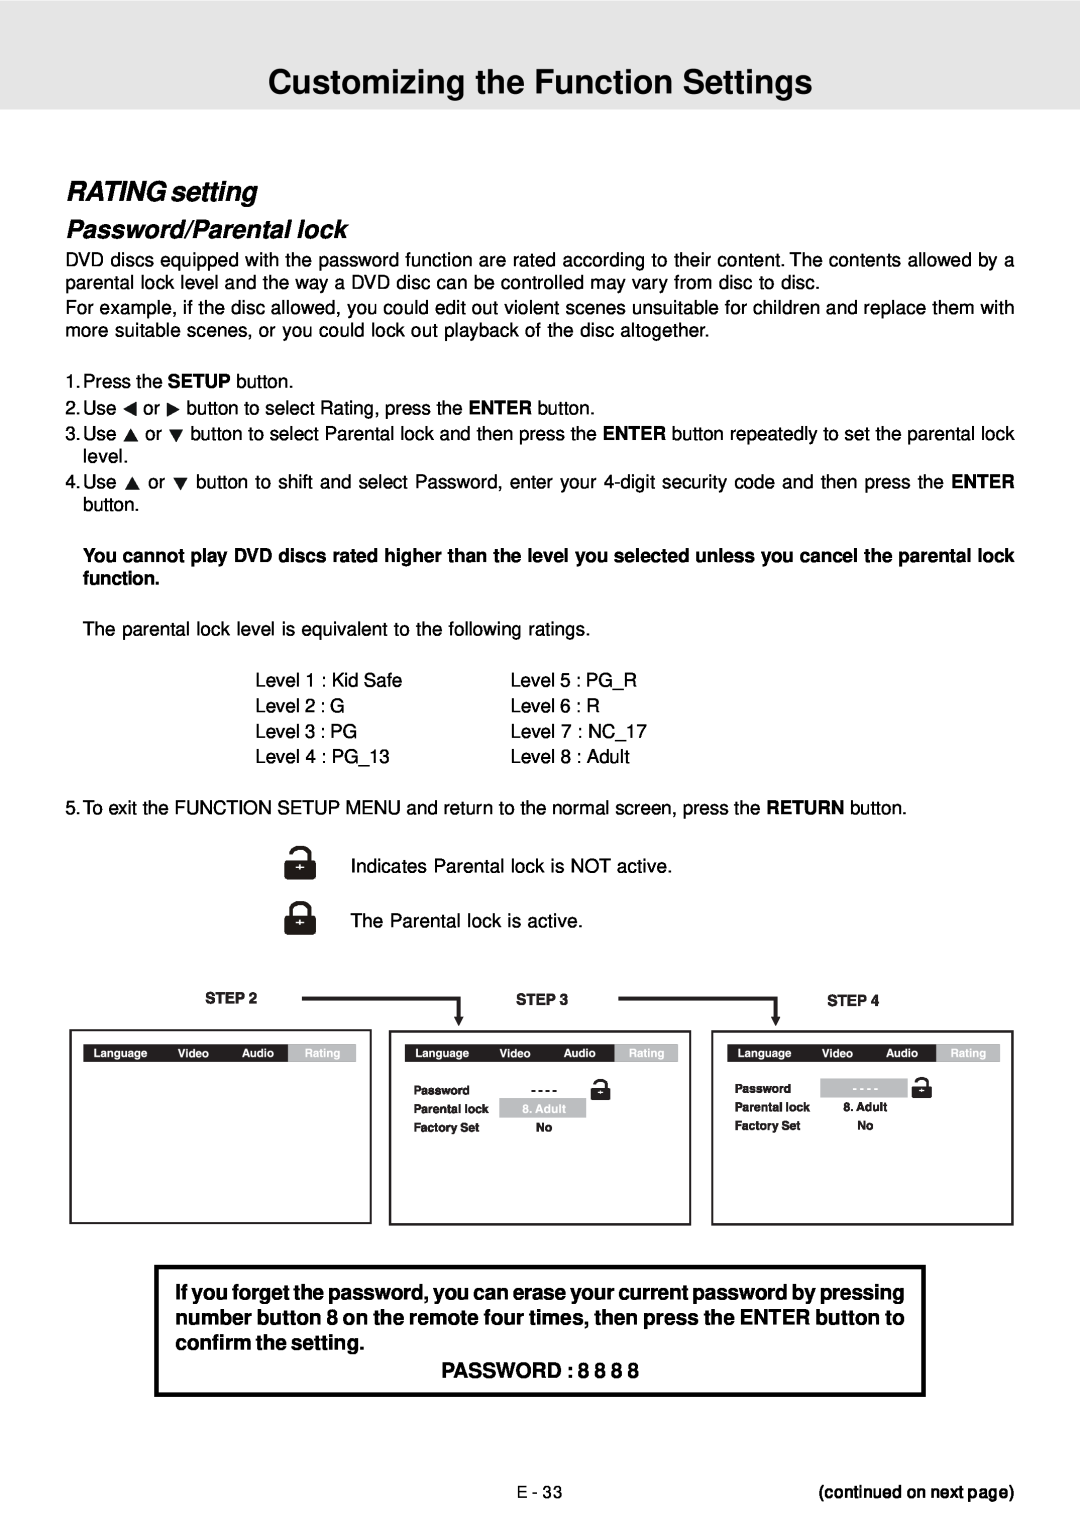 Venturer STS91 manual RATING setting, Password/Parental lock, Customizing the Function Settings, PASSWORD 8 